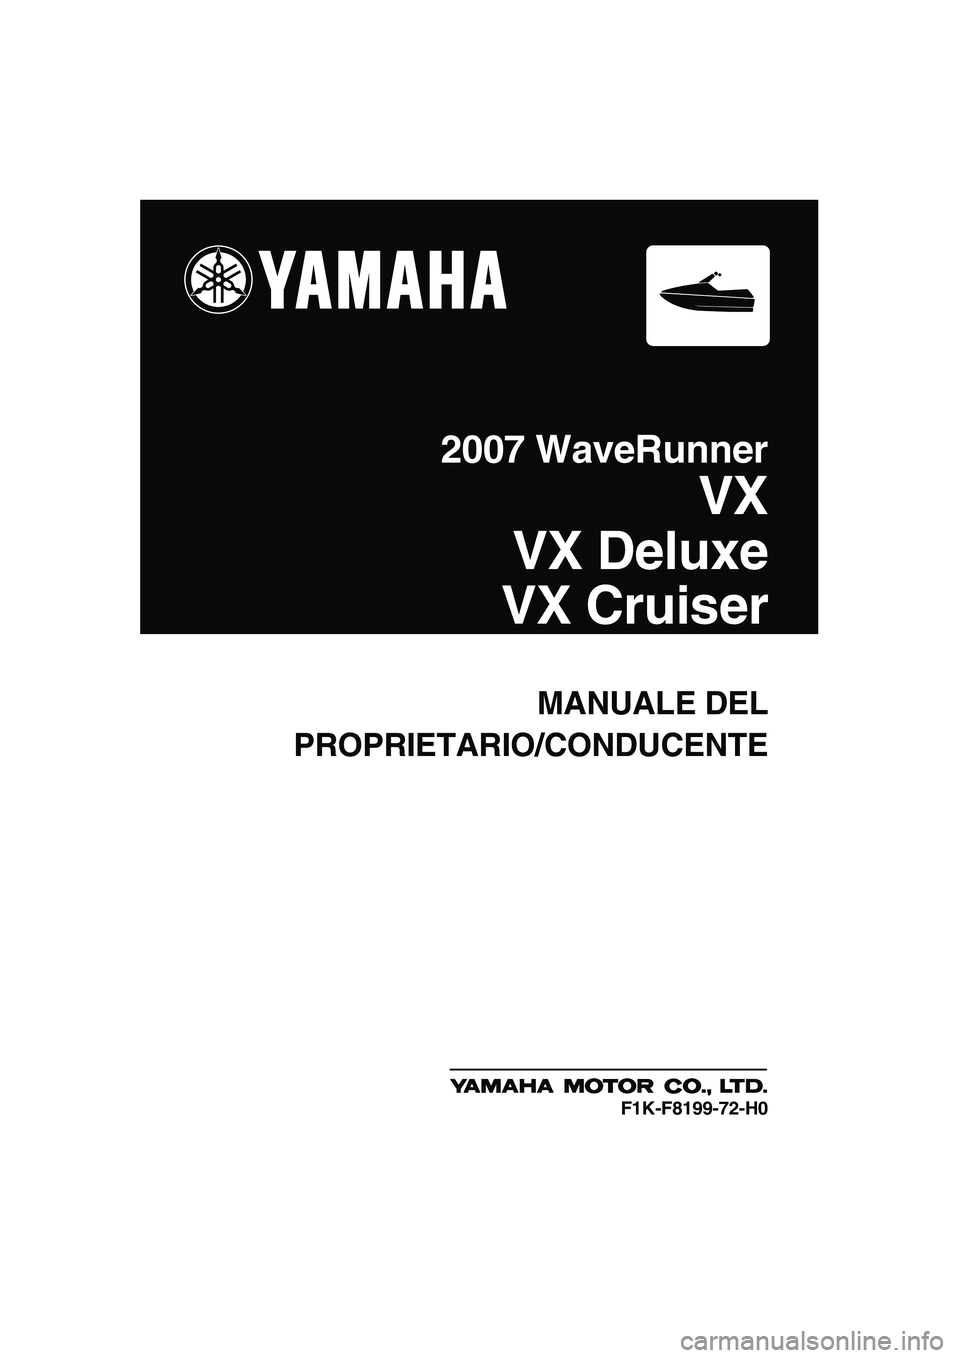 YAMAHA VX SPORT 2007  Manuale duso (in Italian) MANUALE DEL
PROPRIETARIO/CONDUCENTE
2007 WaveRunner
VX
VX Deluxe
VX Cruiser
F1K-F8199-72-H0
UF1K72H0.book  Page 1  Thursday, August 3, 2006  10:20 AM 